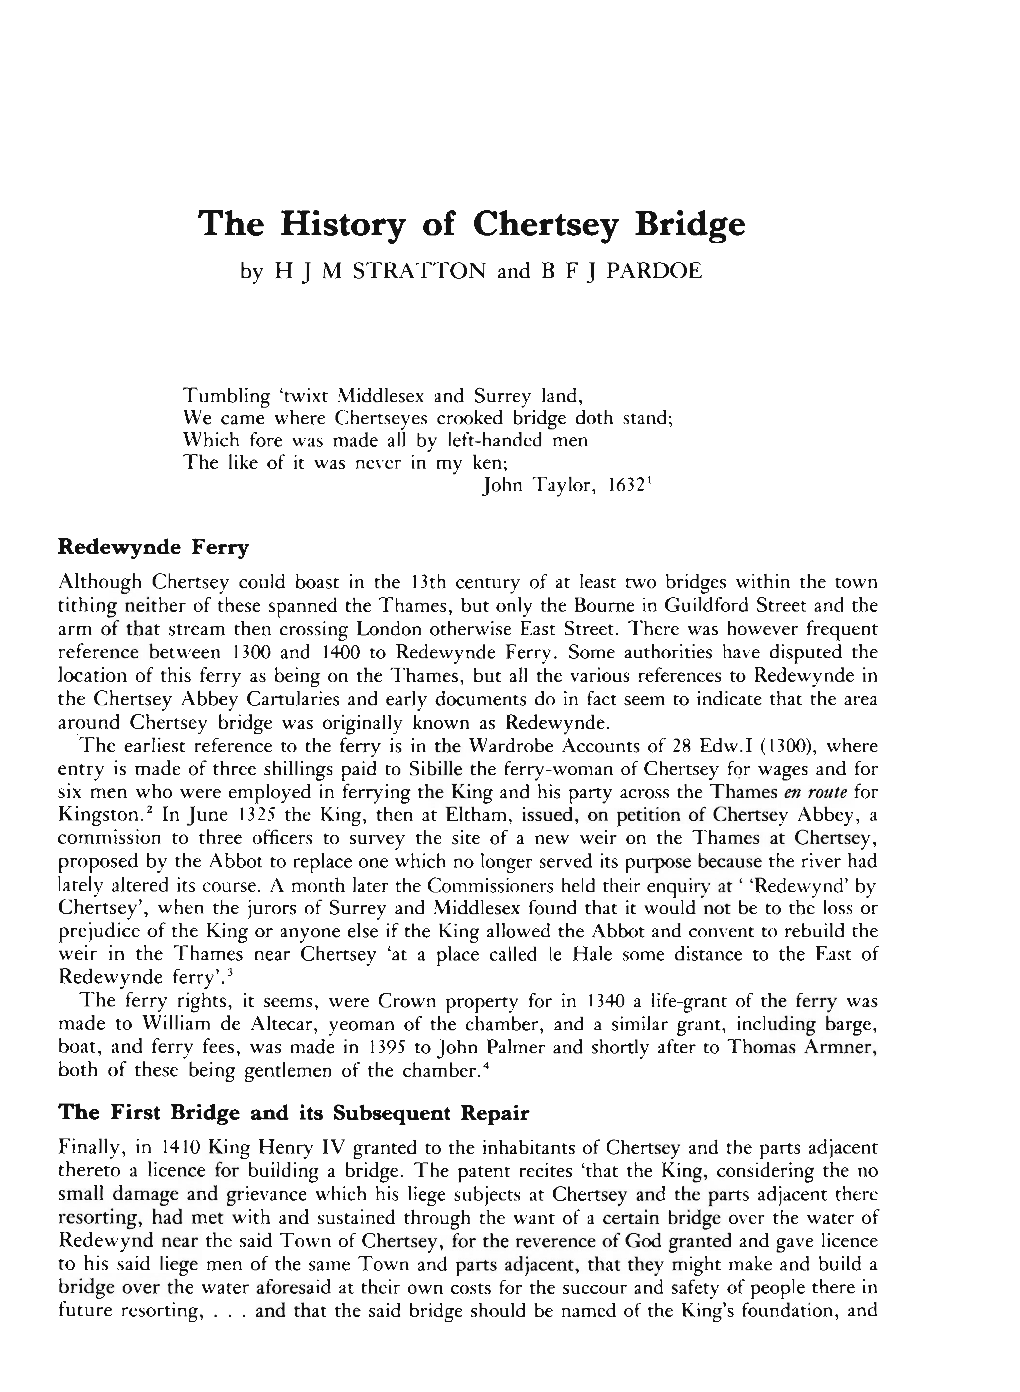 The History of Chertsey Bridge by H J M STRATTON and B F J PARDOE